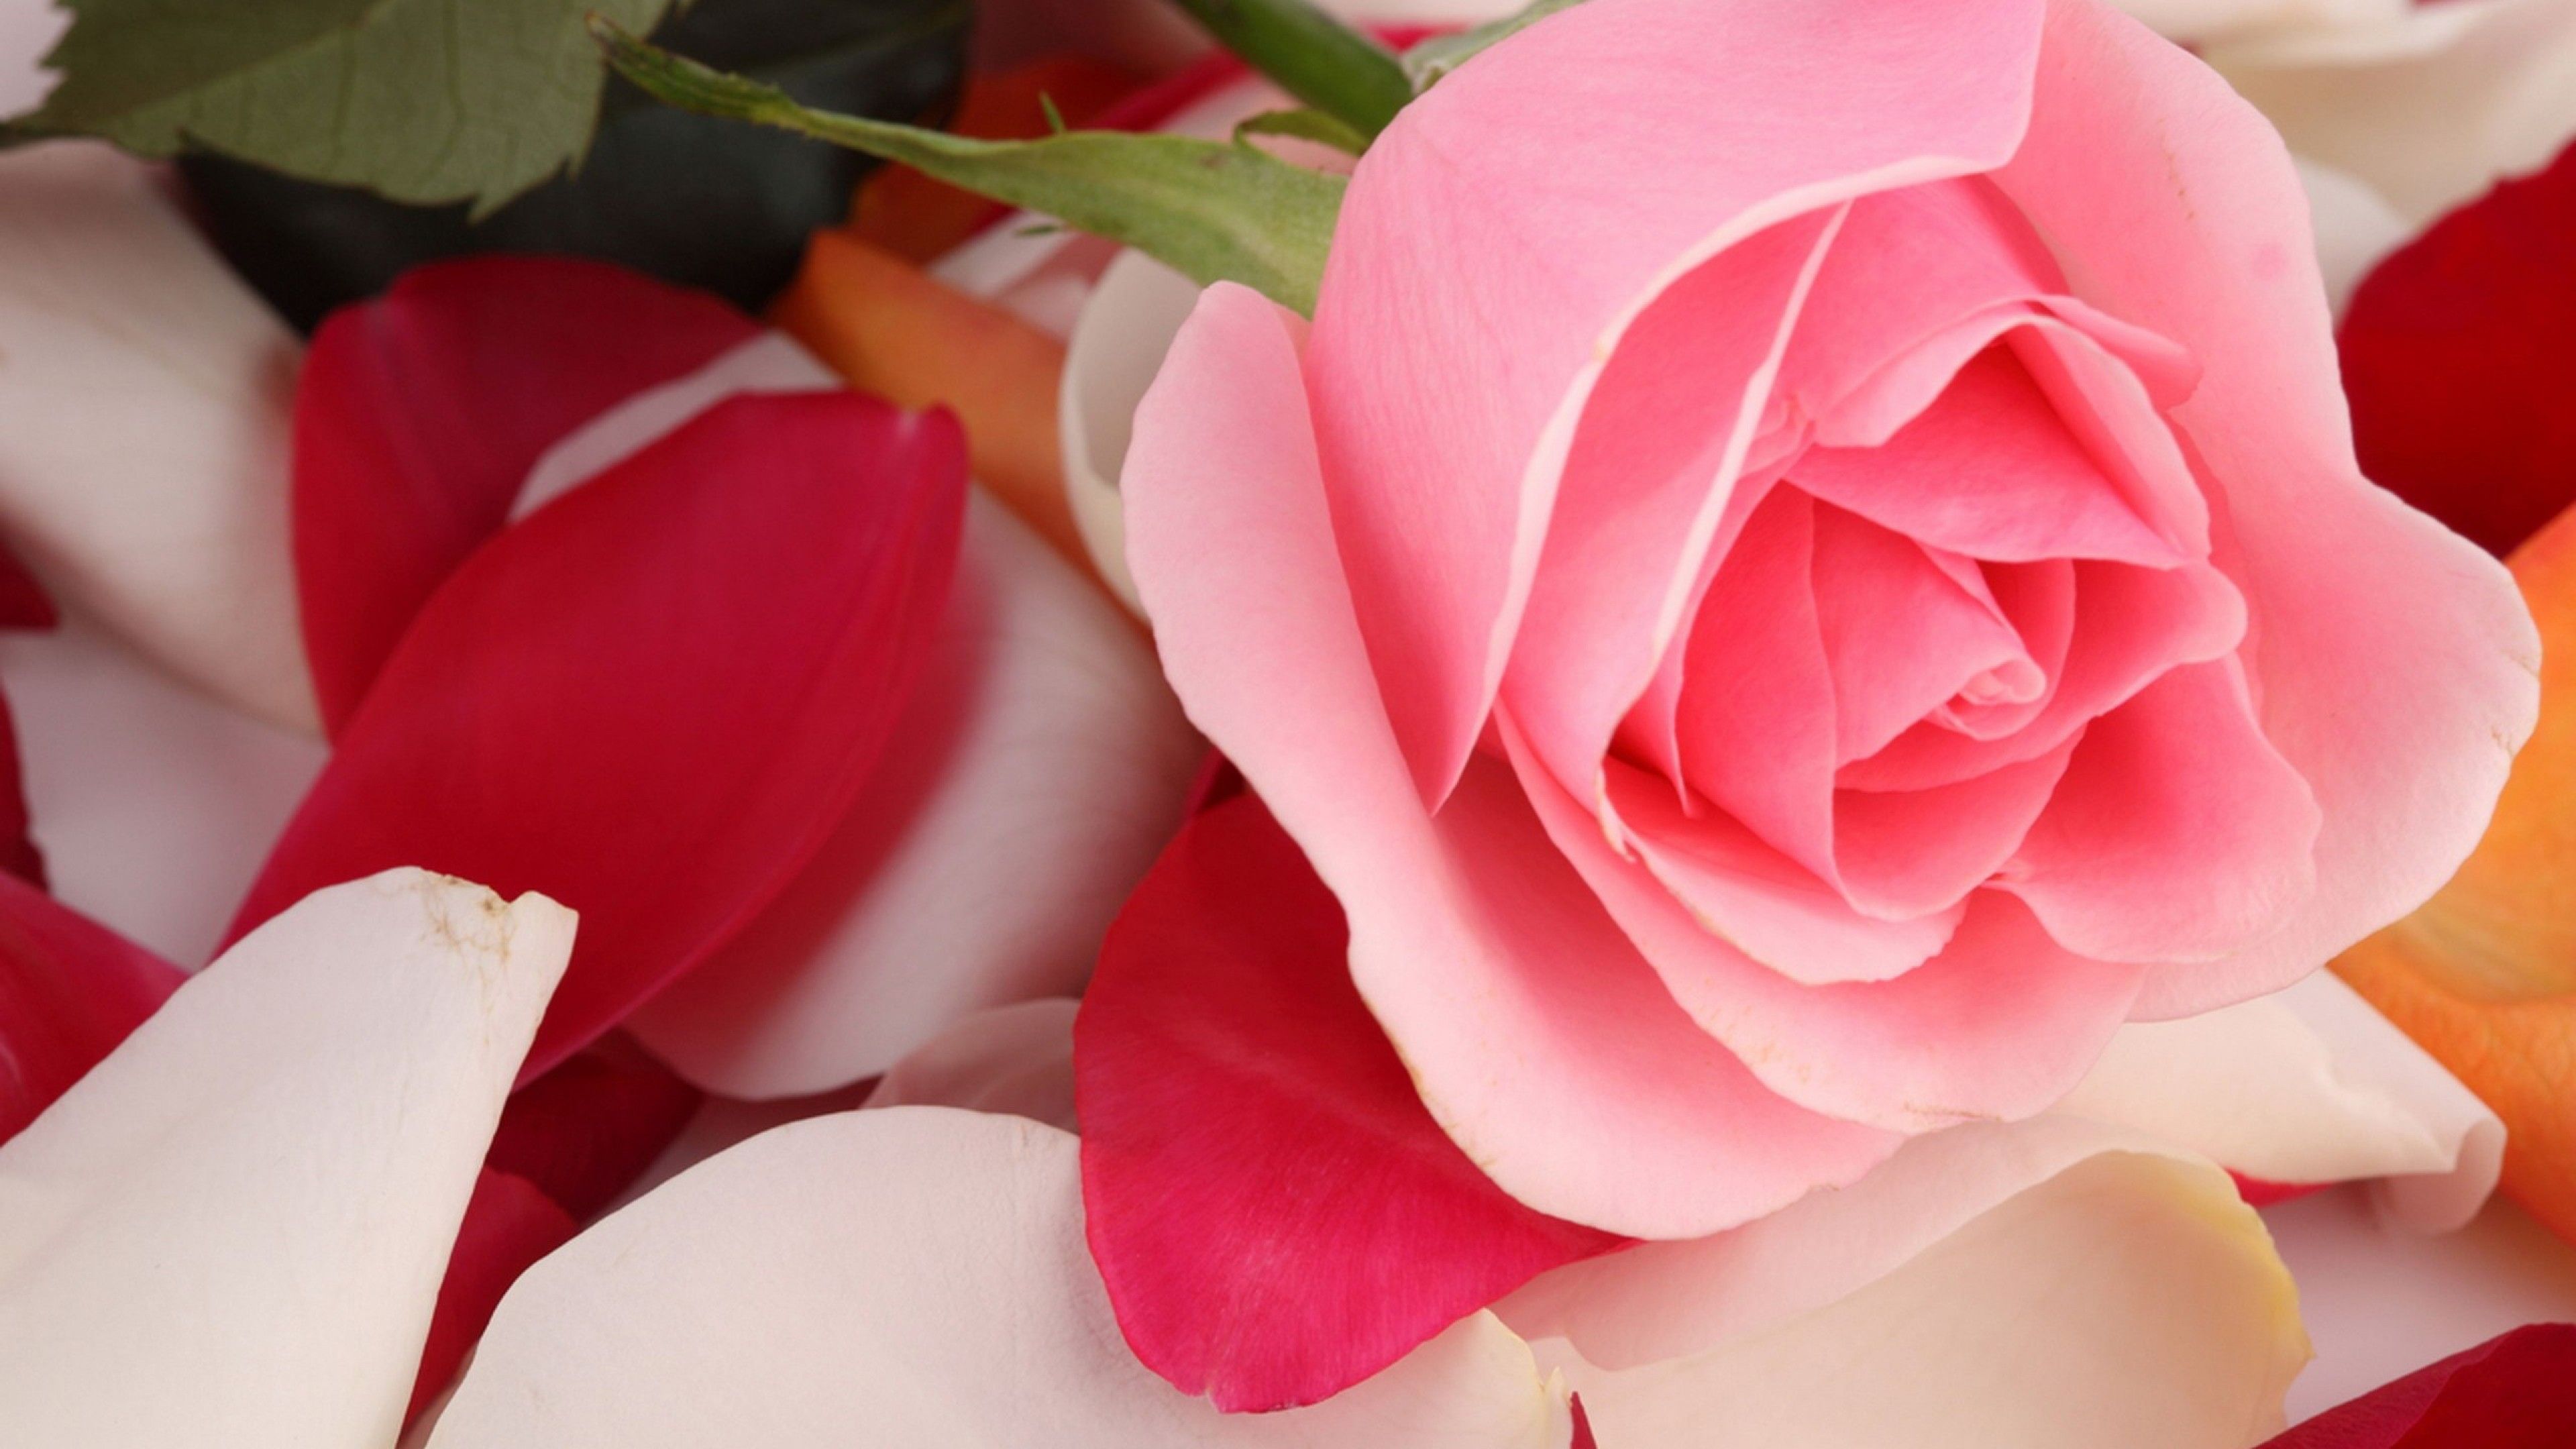 Beautiful Rose Flower Wallpaper for Desktop and Mobiles 4K Ultra